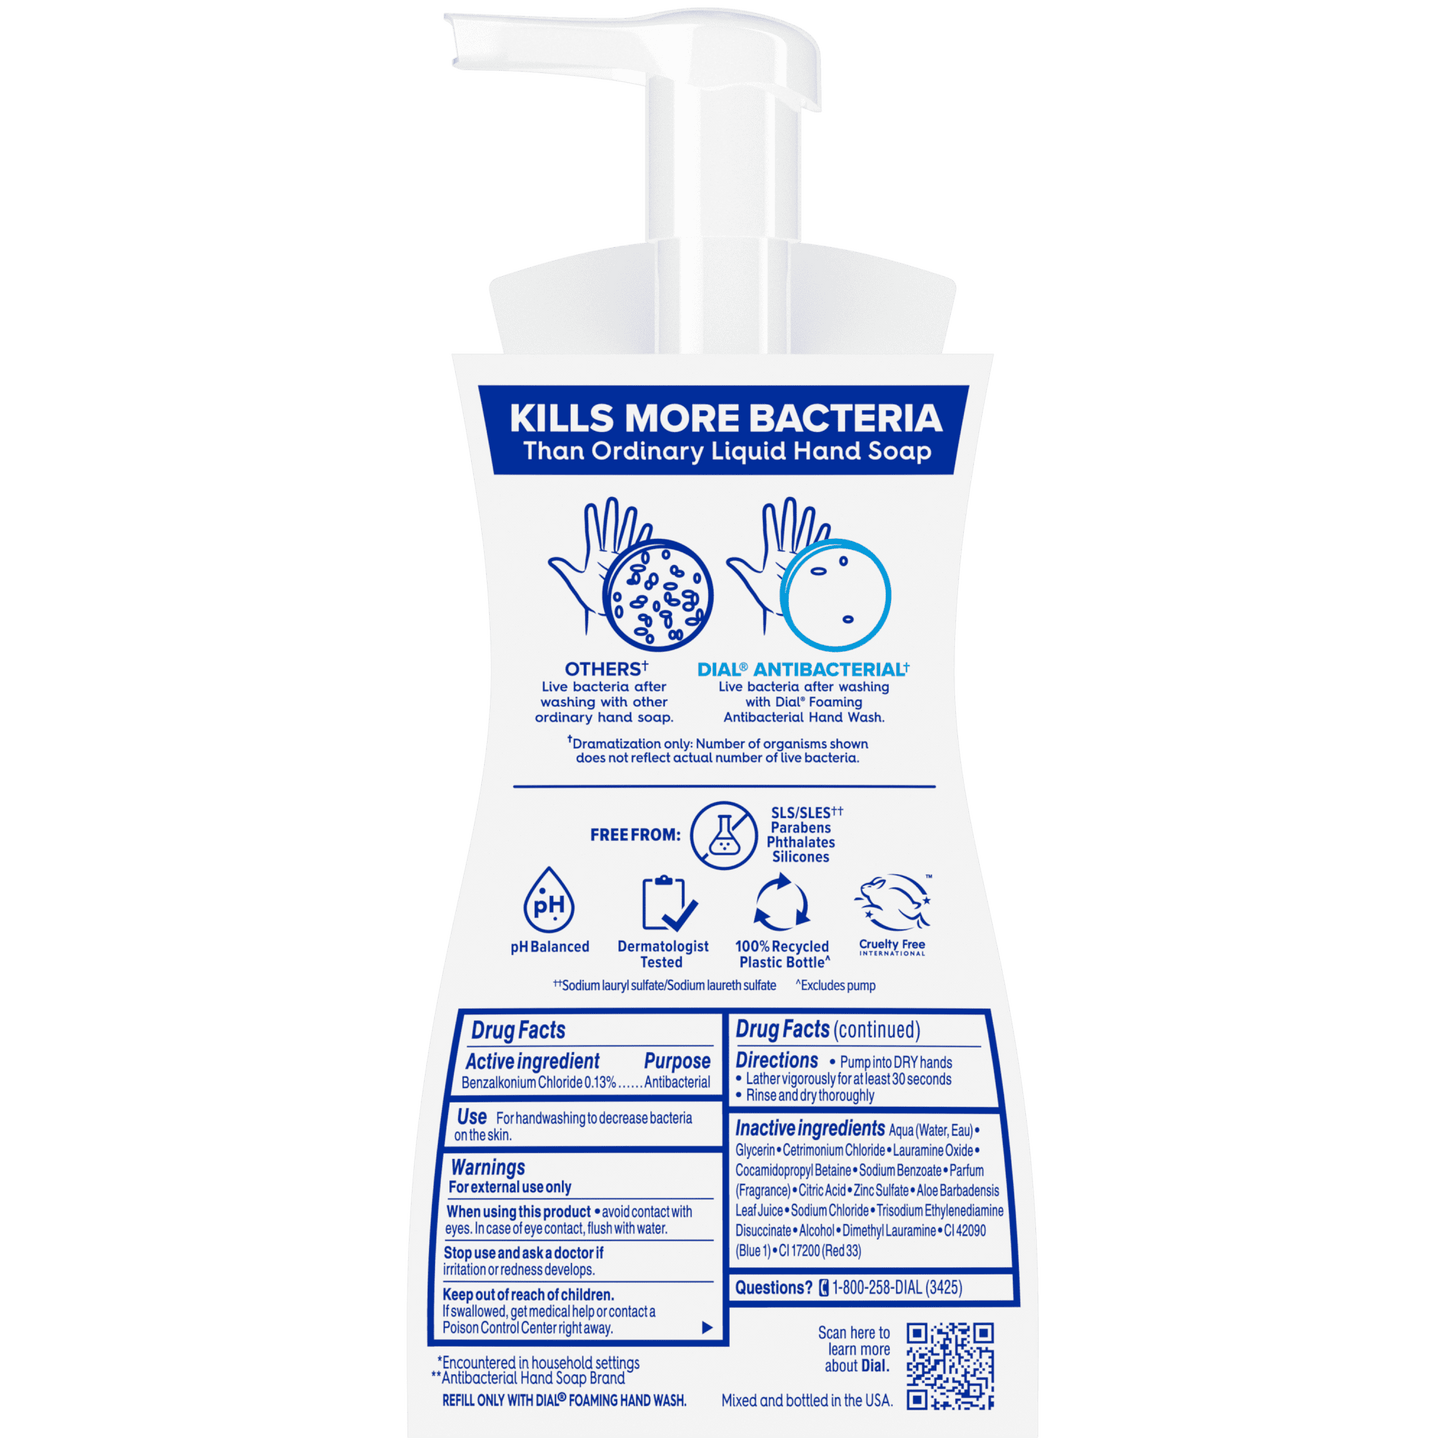 Dial Antibacterial Foaming Hand Wash, Soothing White Tea, 7.5 fl oz